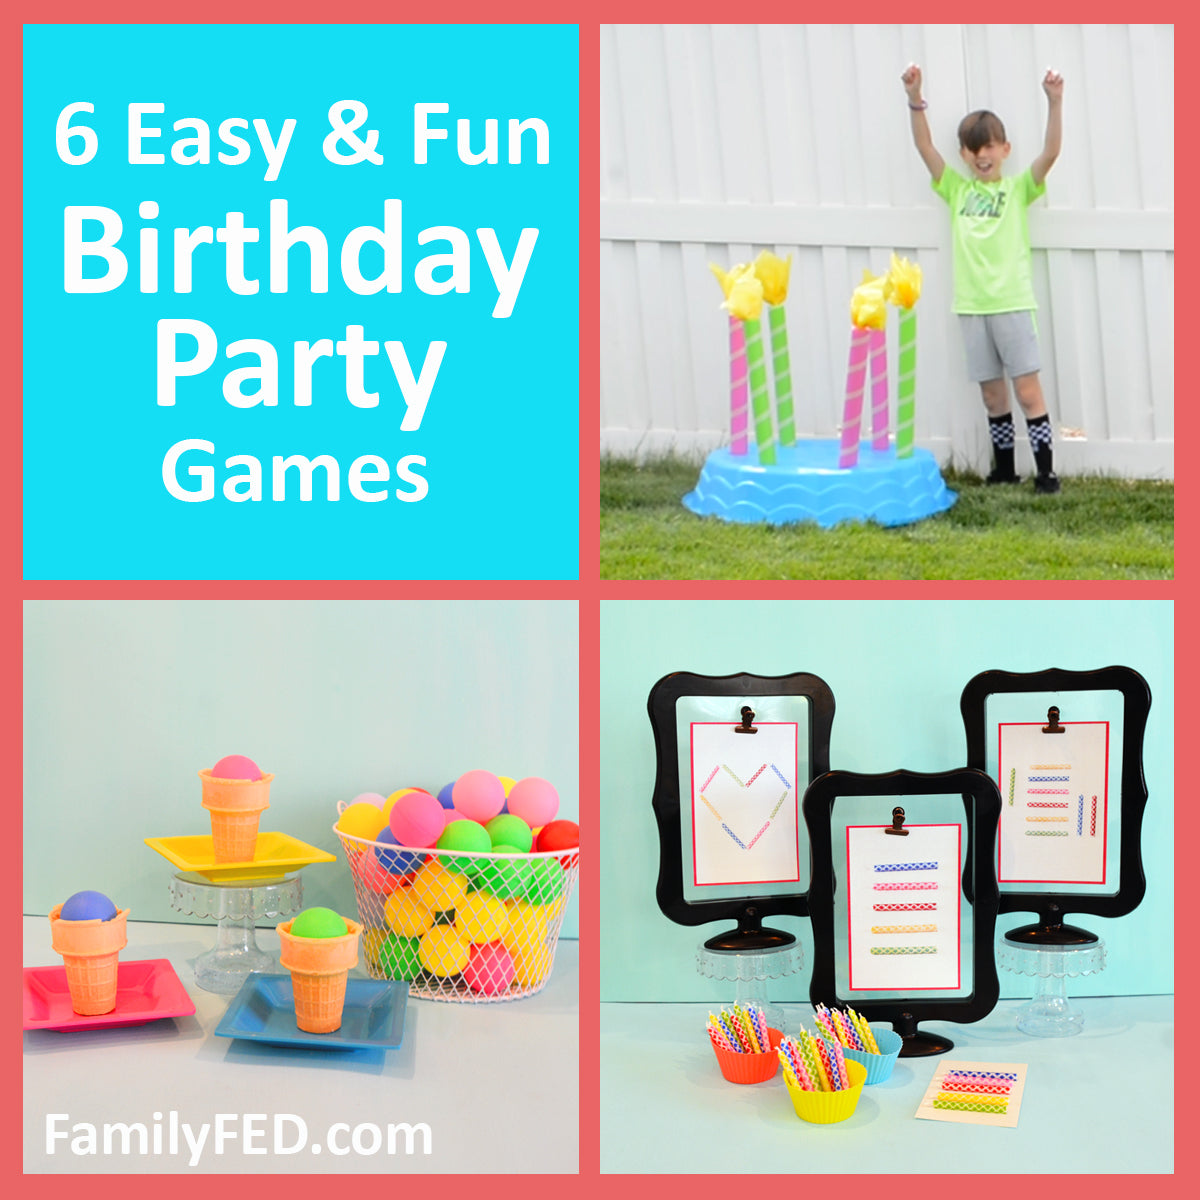 Rainbow party games - Birthday activity ideas - Treasure hunt 4 Kids